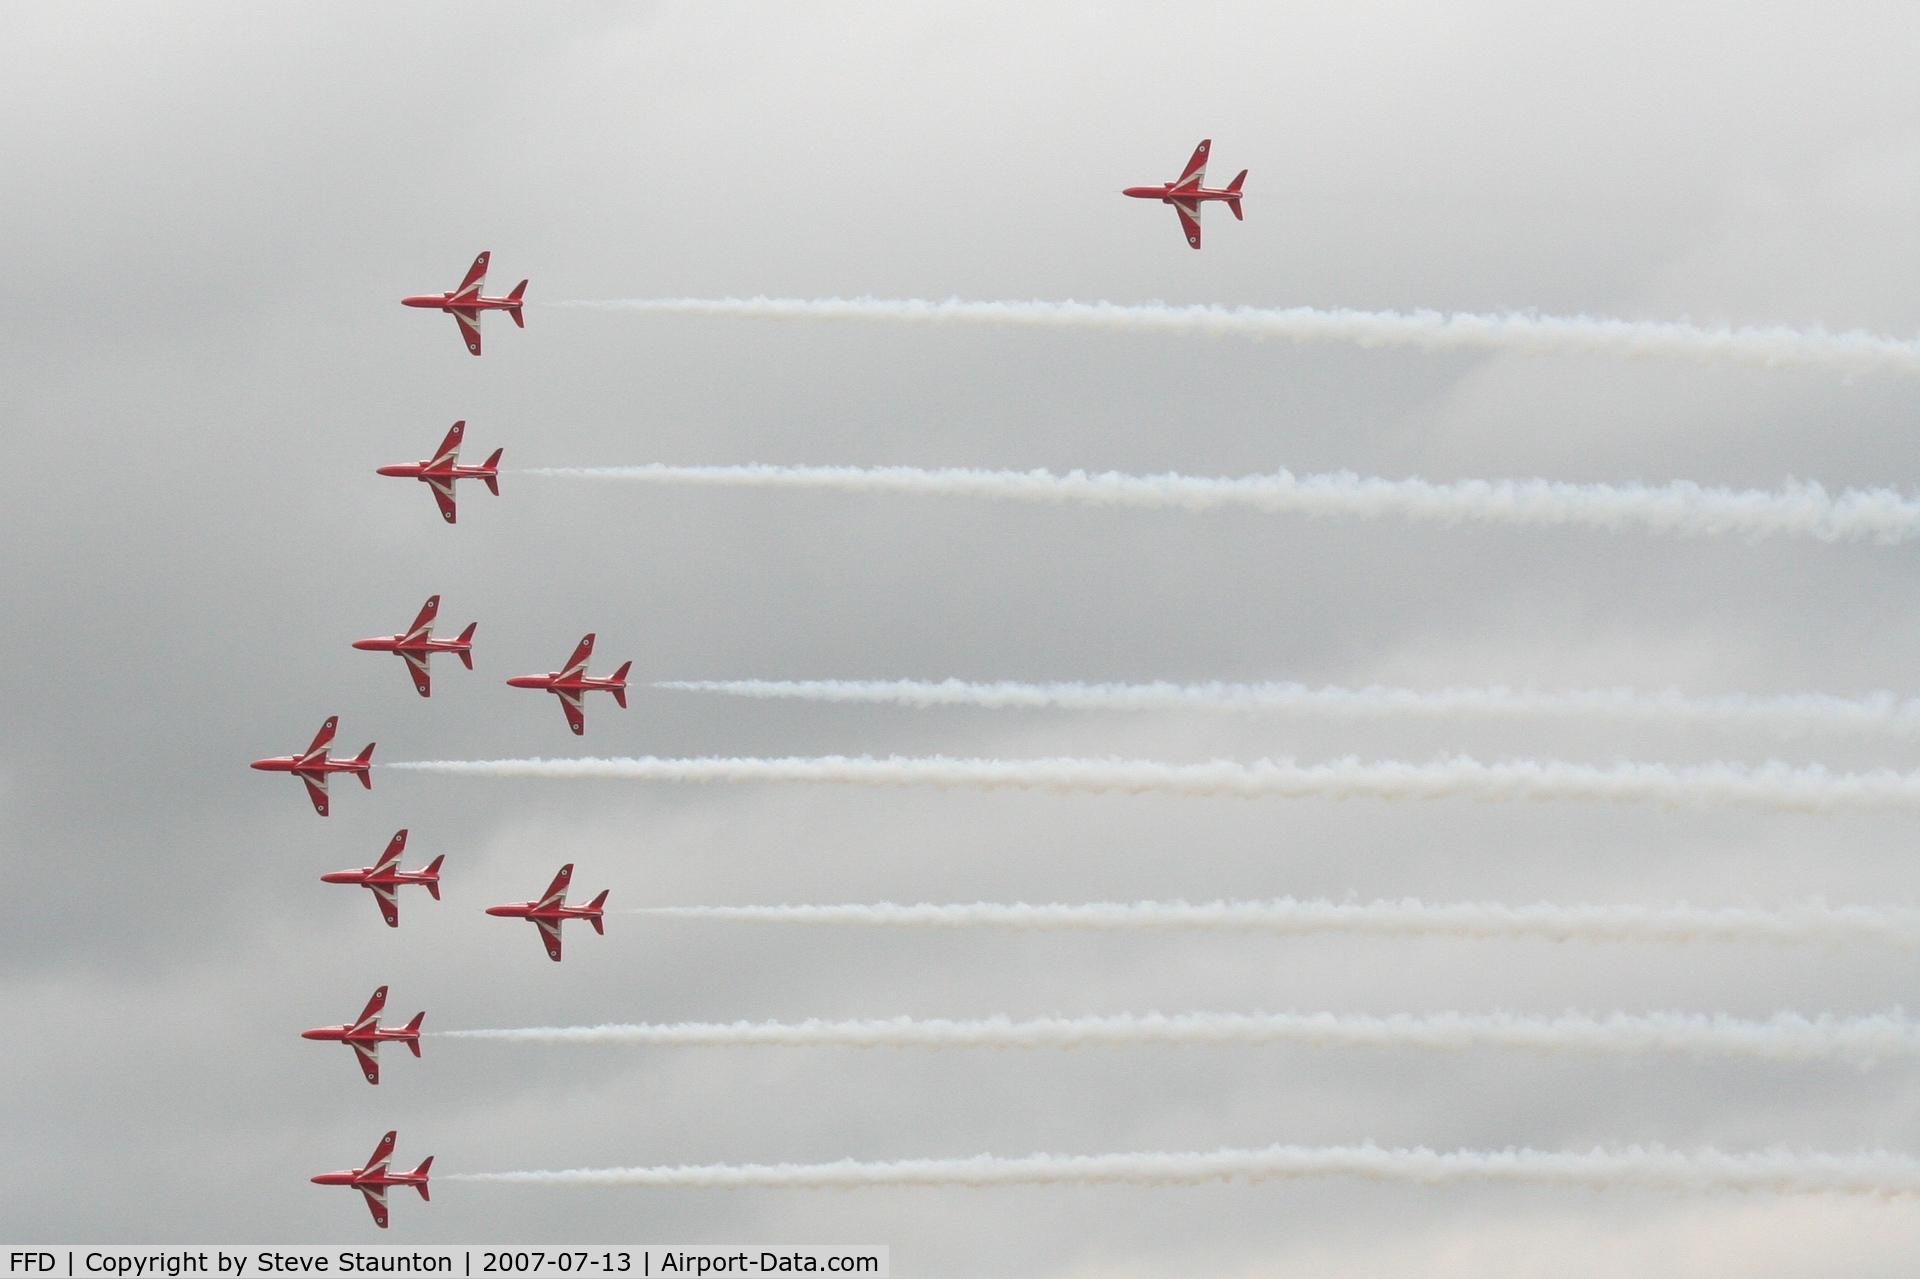 RAF Fairford Airport, Fairford, England United Kingdom (FFD) - Red Arrows in 10 ship formation at Royal International Air Tattoo 2007